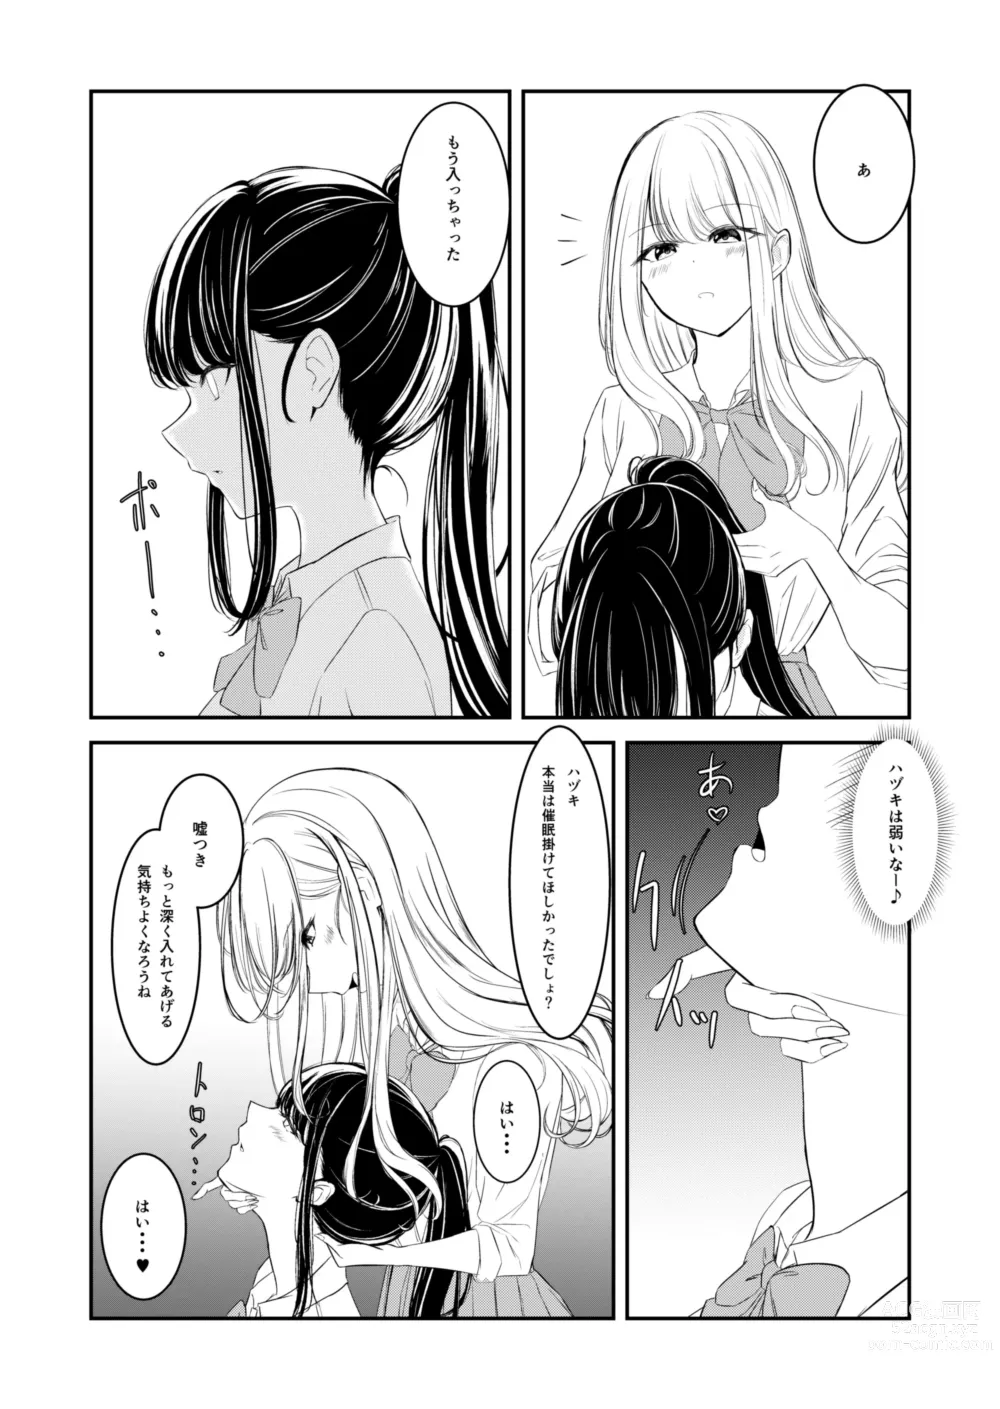 Page 10 of doujinshi Yuri comic Part 1,2 and 3.